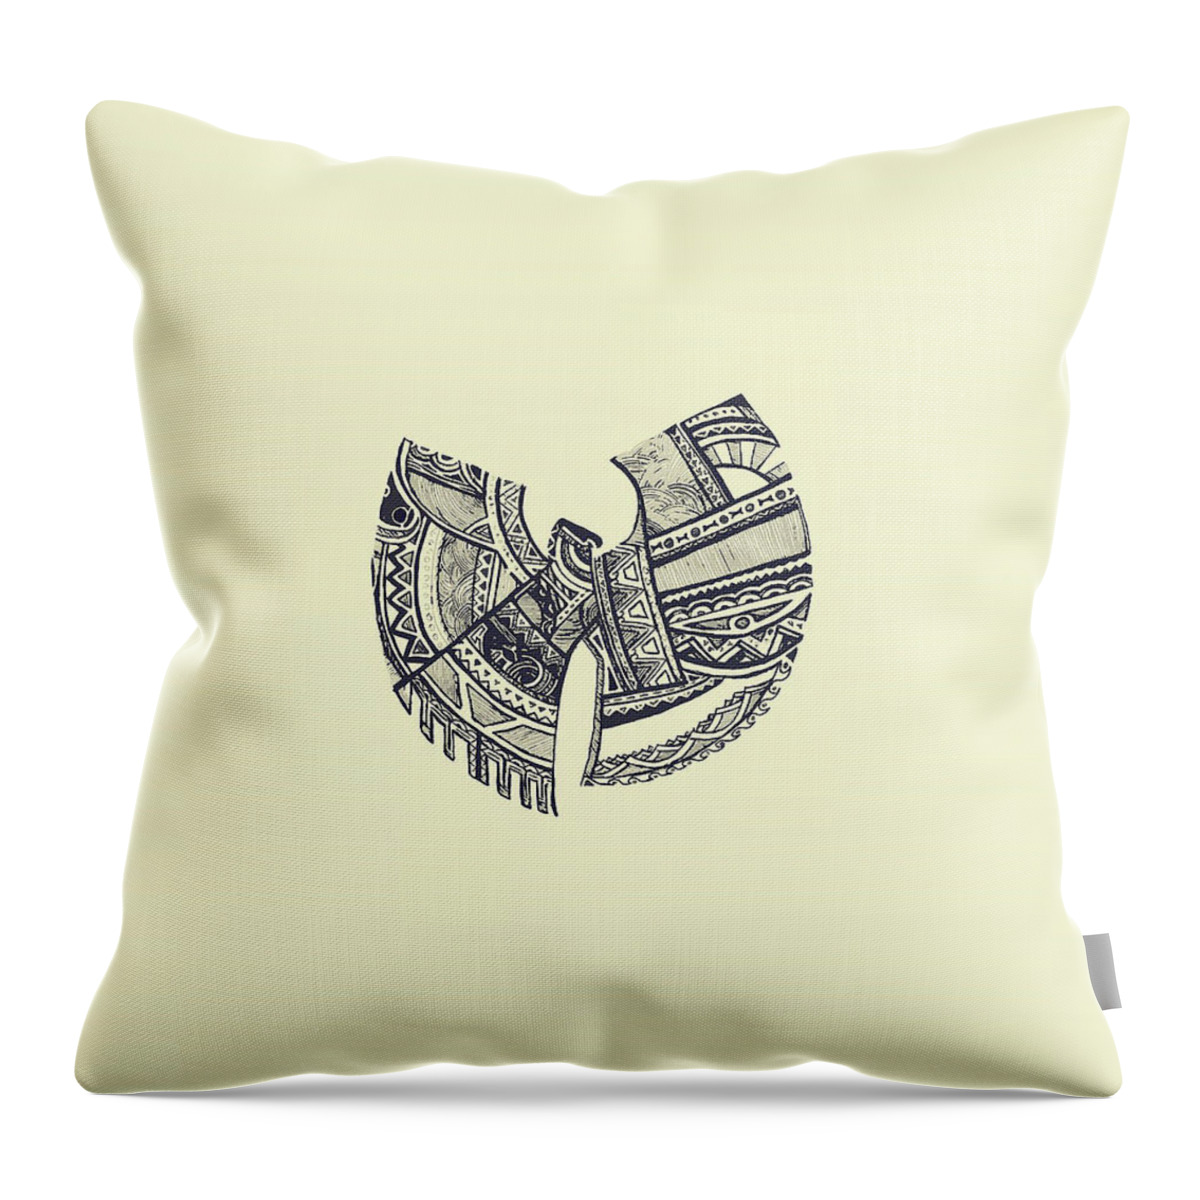 Wu-tang Clan Symbol Throw Pillow featuring the digital art Wu-Tang Clan Symbol-539 by Jovemini J